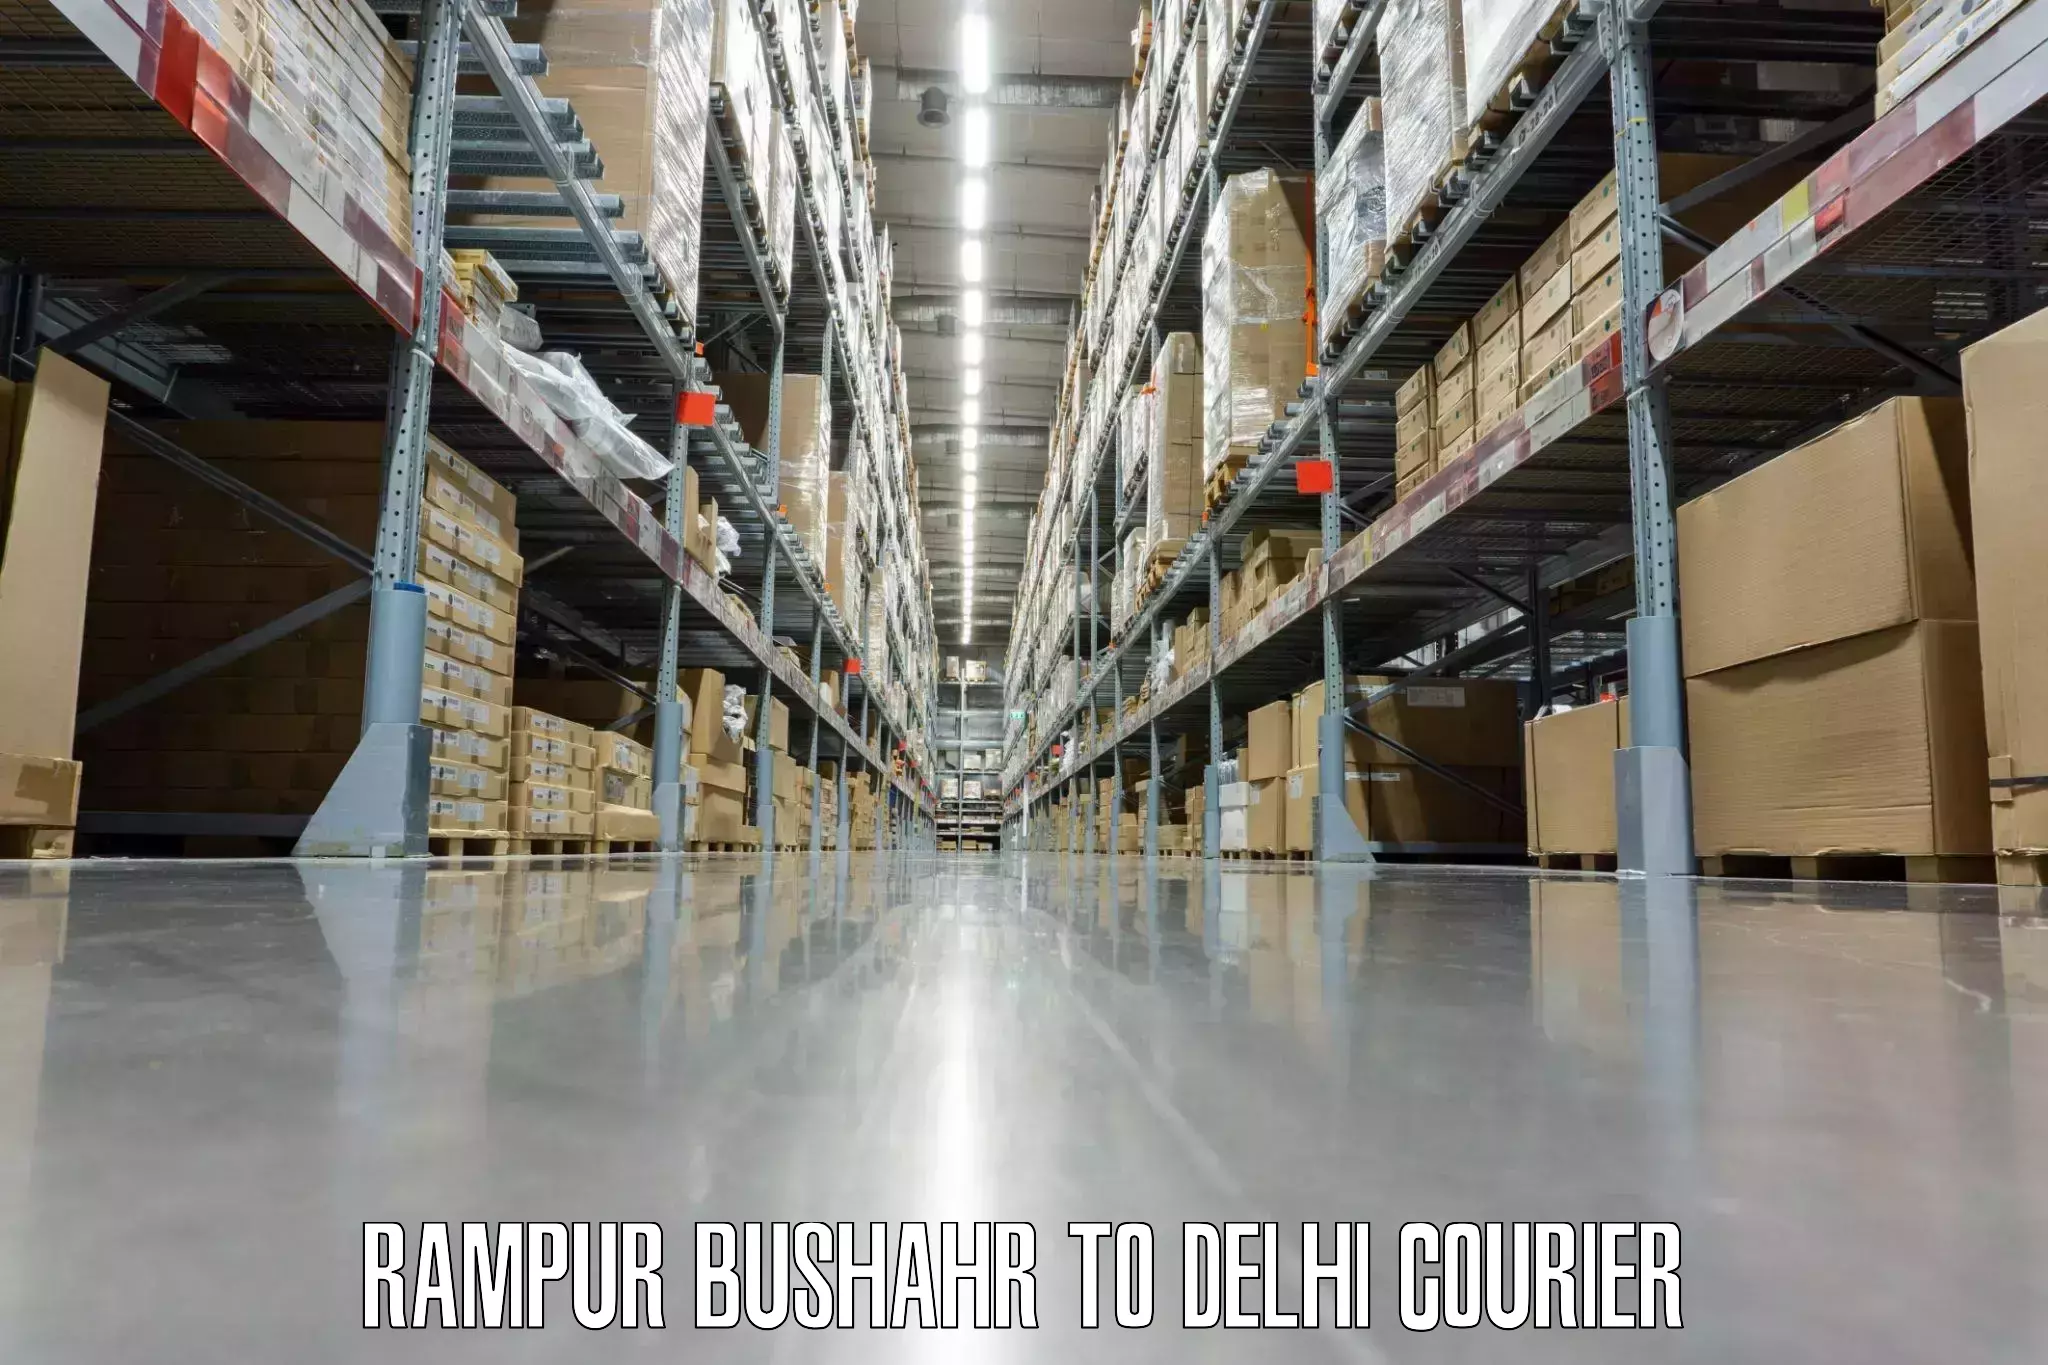 Baggage relocation service Rampur Bushahr to NCR